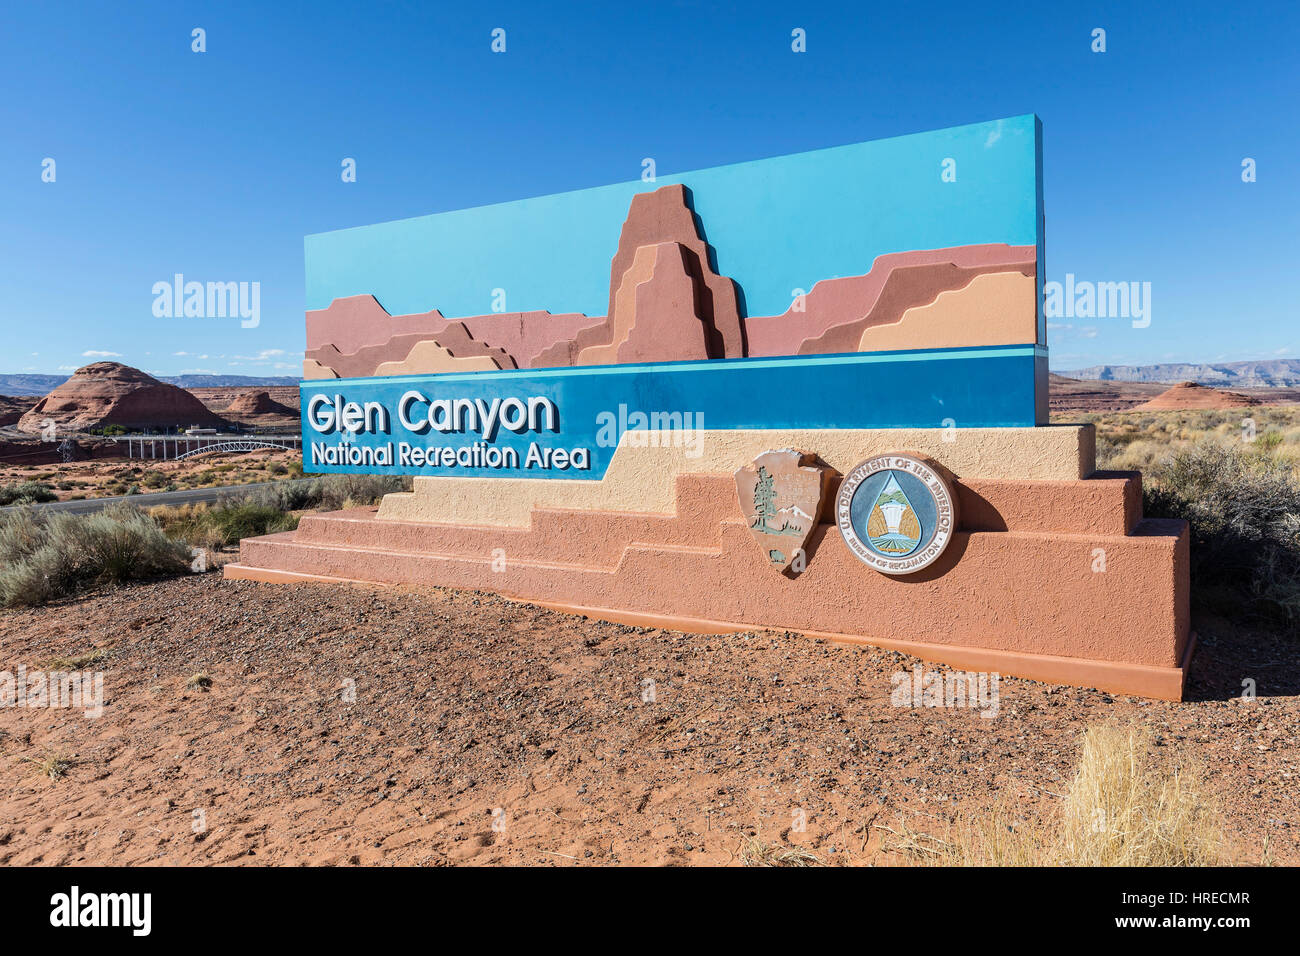 Page, Arizona, USA - 17. Oktober 2016: Glen Canyon National Recreation Area Ortseingangsschild im nördlichen Arizona. Stockfoto